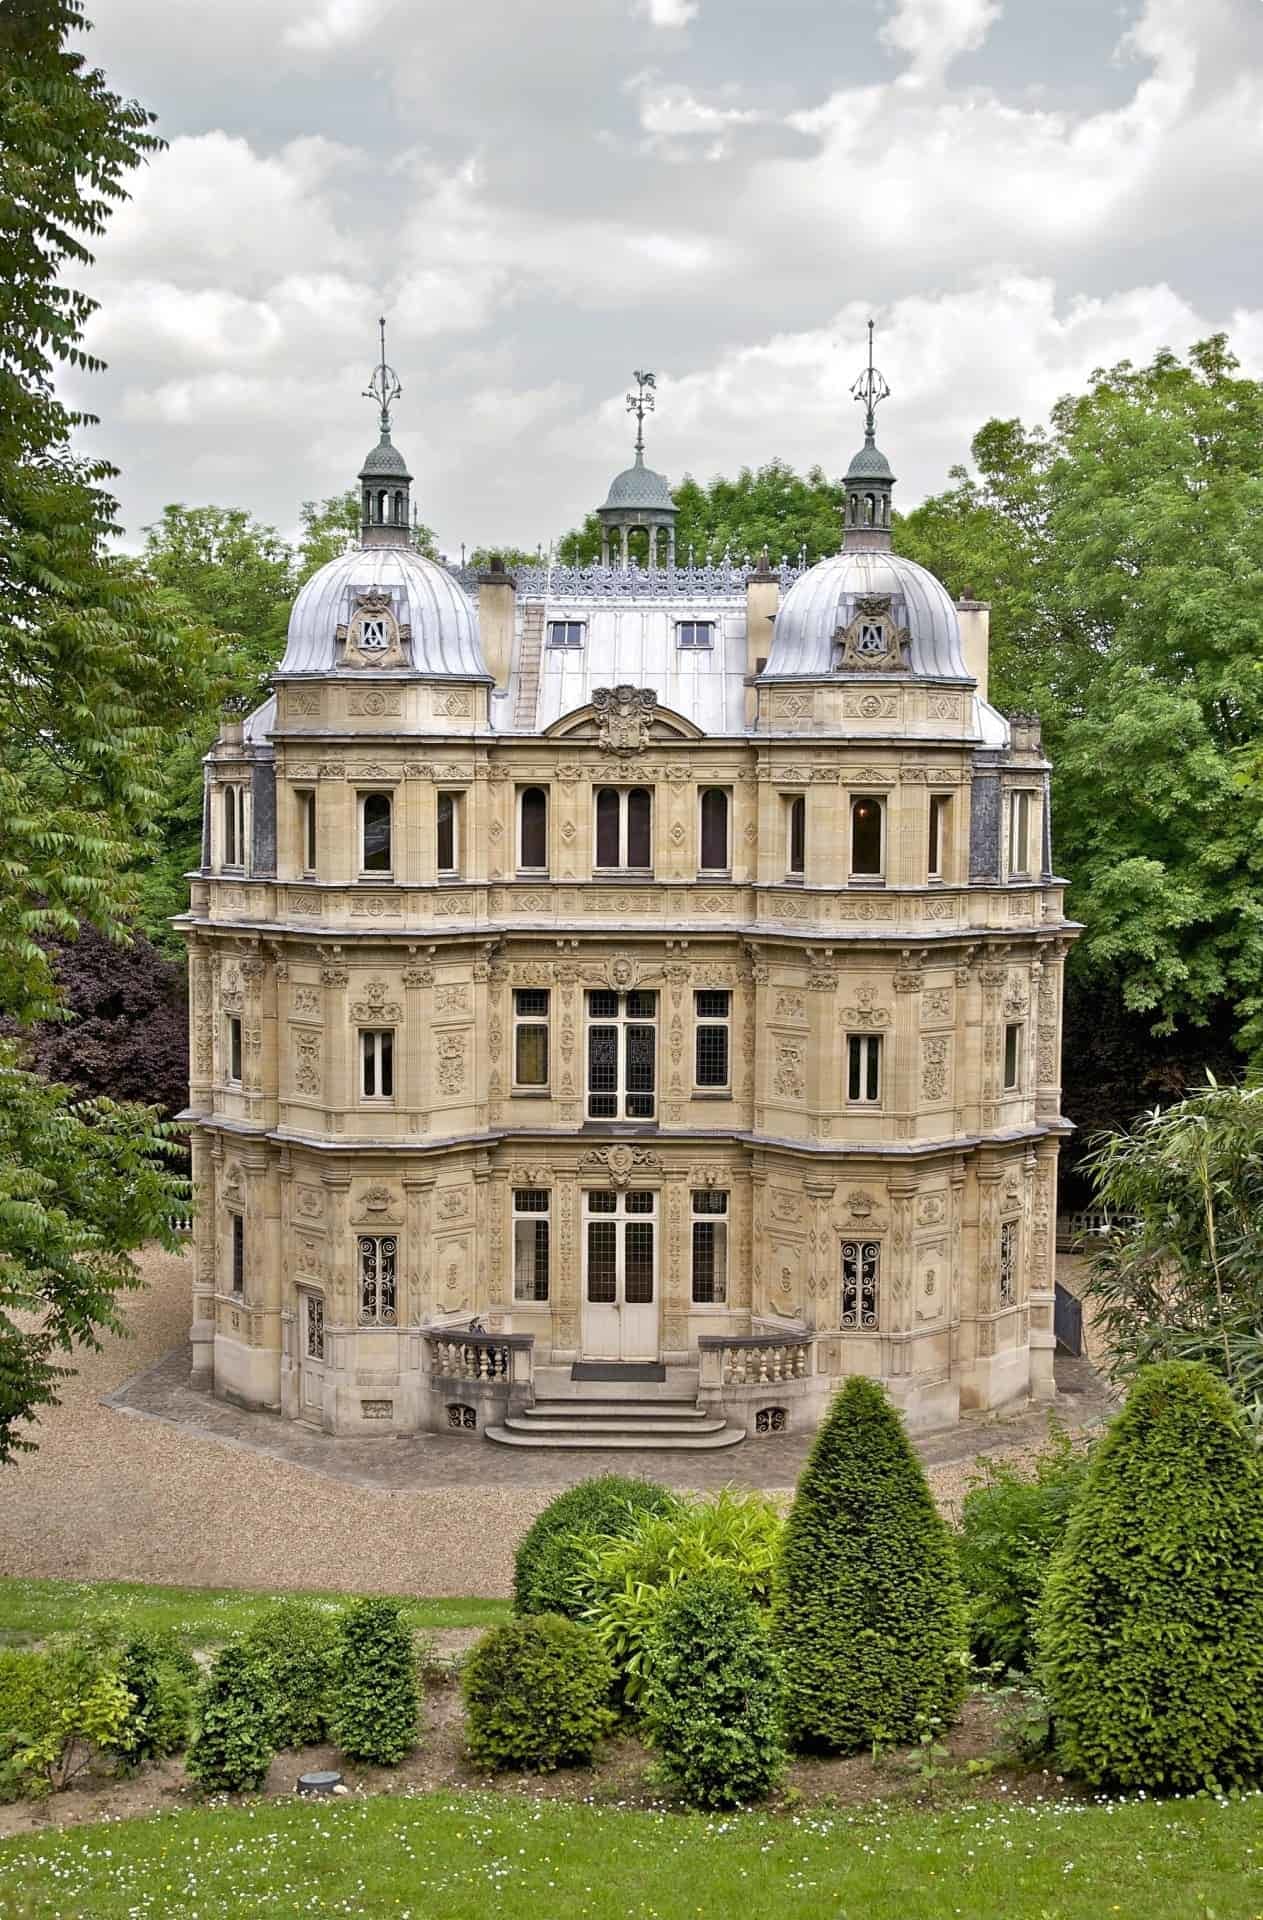 Alexander Dumas' residence, Chateau du Monte-Cristo